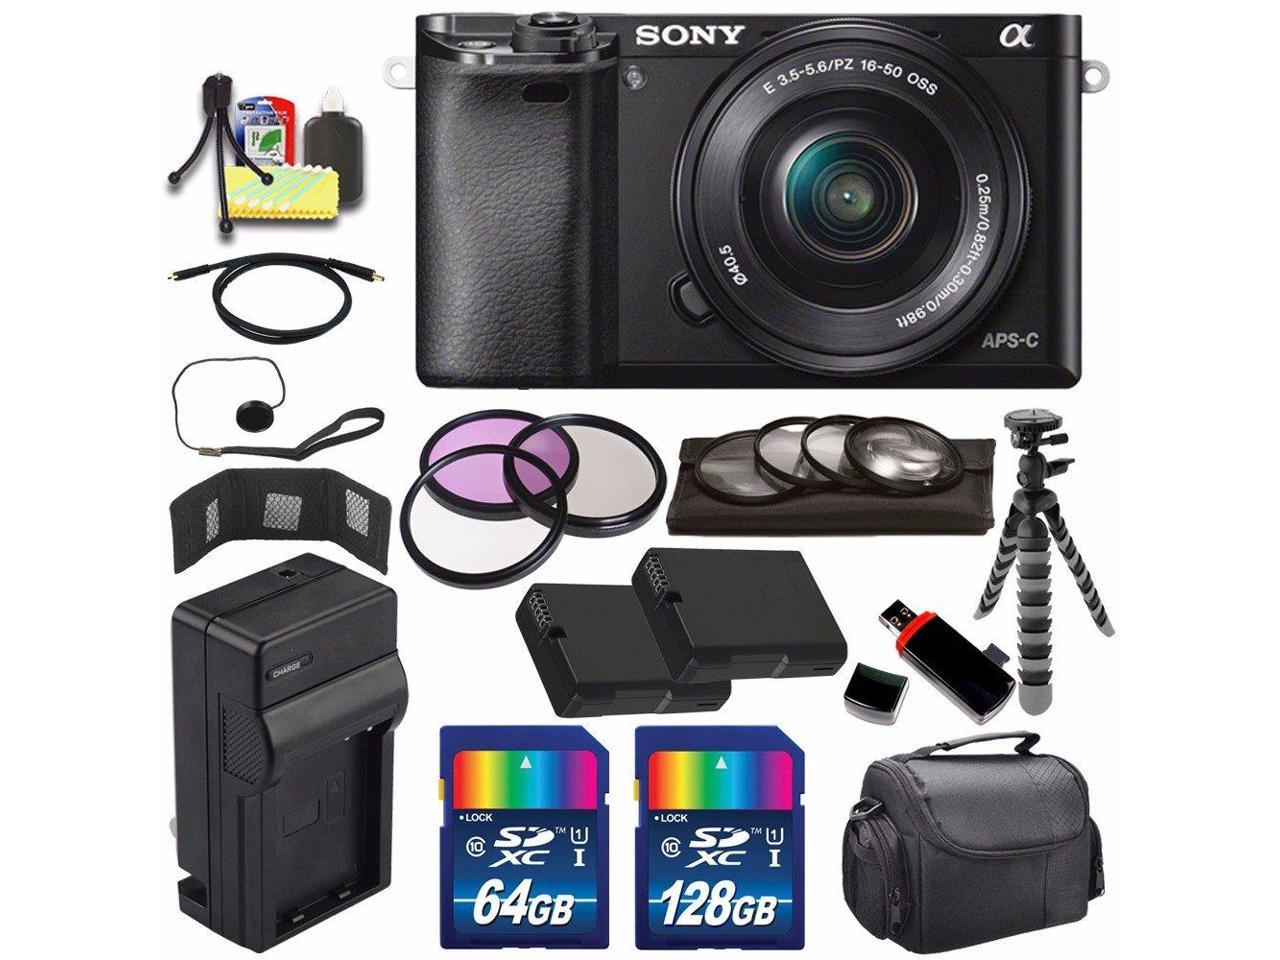 Sony Alpha a6000 Mirrorless Digital Camera with 16-50mm Lens (Black) + Battery + Charger + 196GB Bundle 9 - International Version (No Warranty)